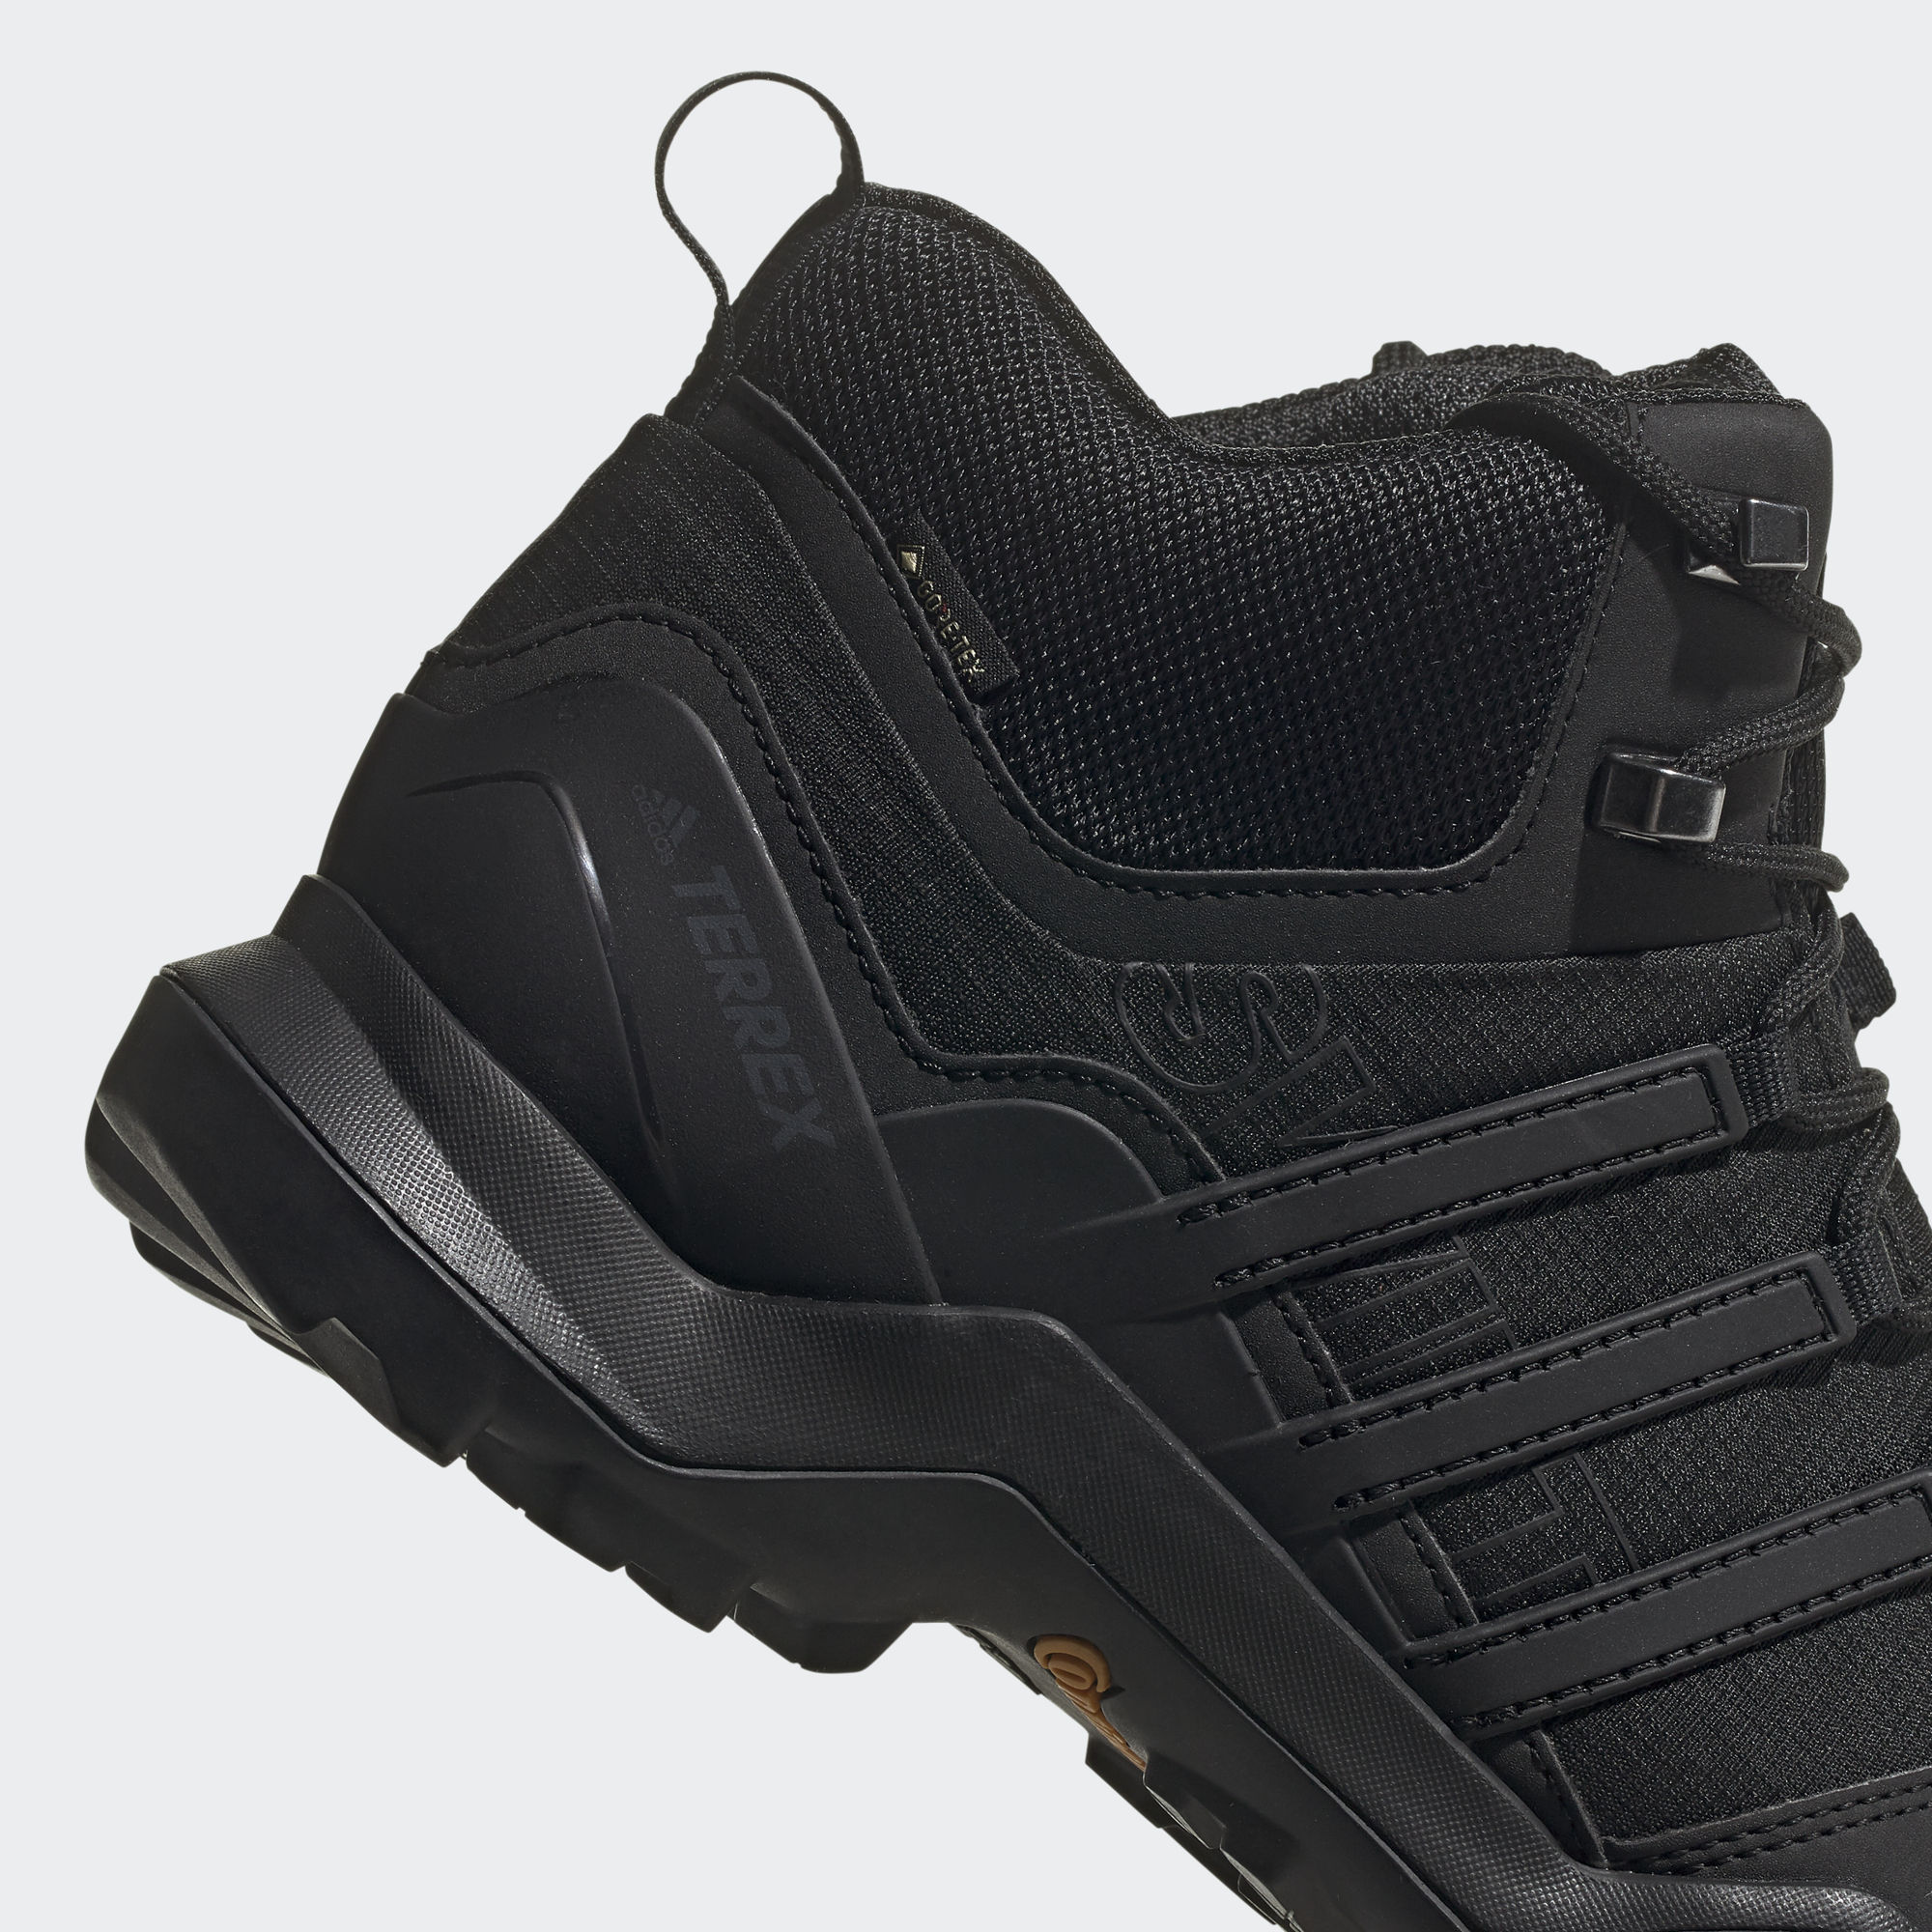 TERREX R2 MID 登山鞋- 黑色| 男子| adidas(愛迪達)香港官方網上商店